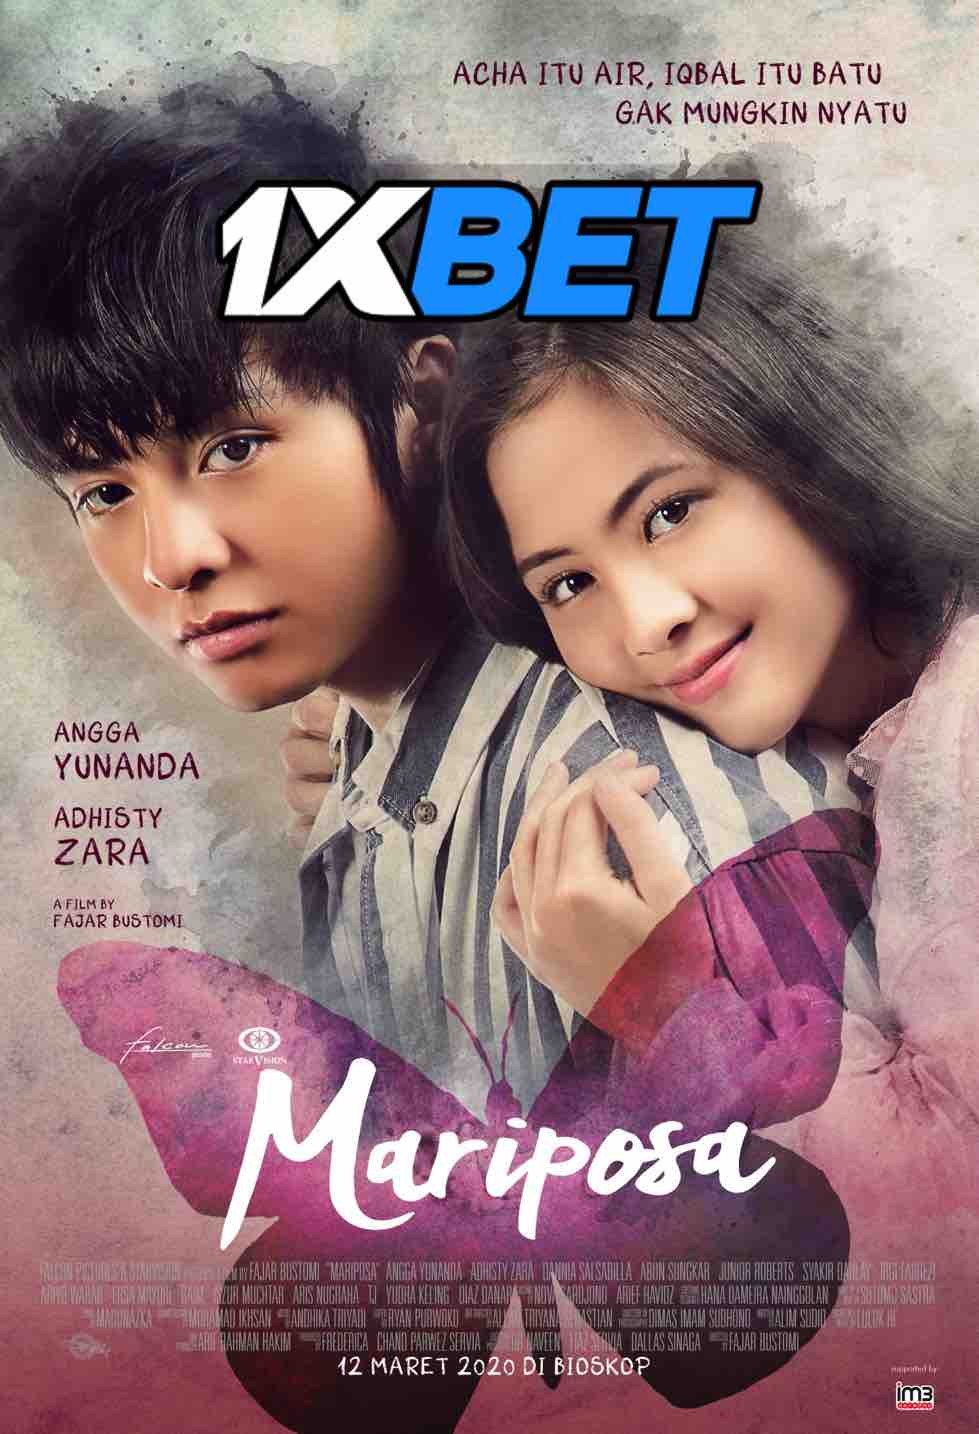 Download Mariposa (2020) Quality 720p & 480p Dual Audio [Hindi Dubbed] Mariposa Full Movie On KatMovieHD